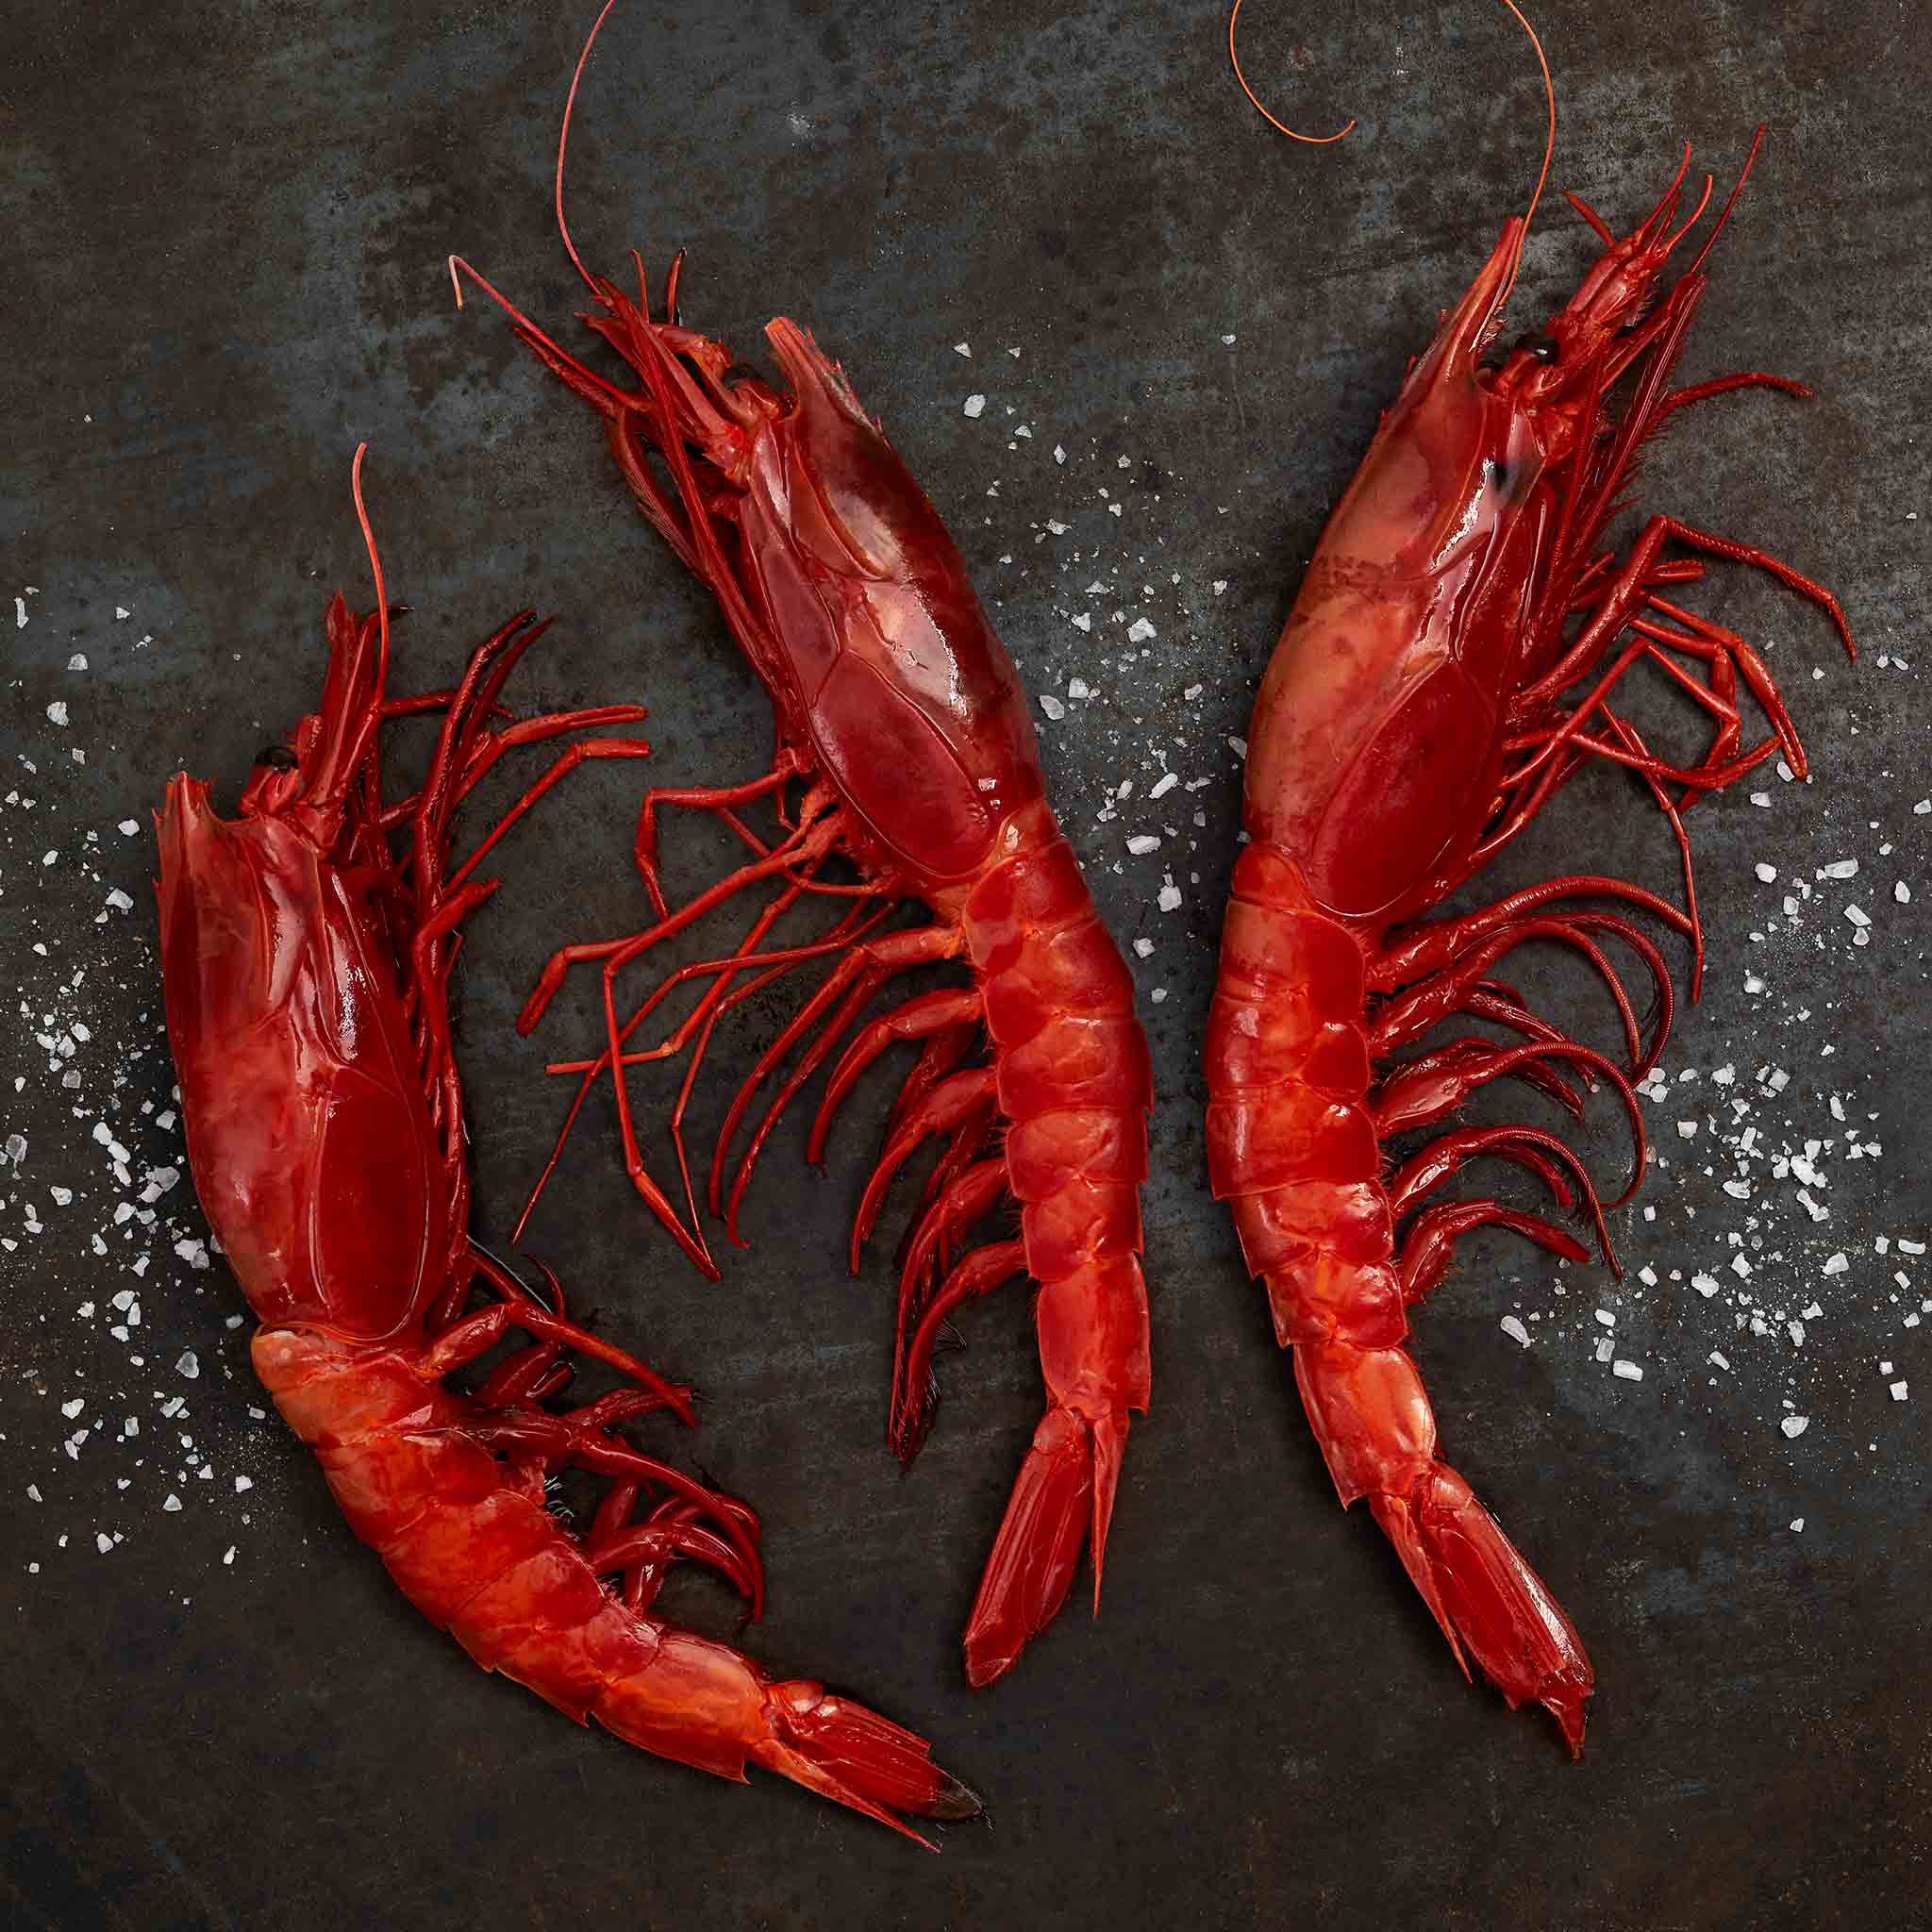 6132 WF Raw Scarlet Shrimp - Carabineros Seafood